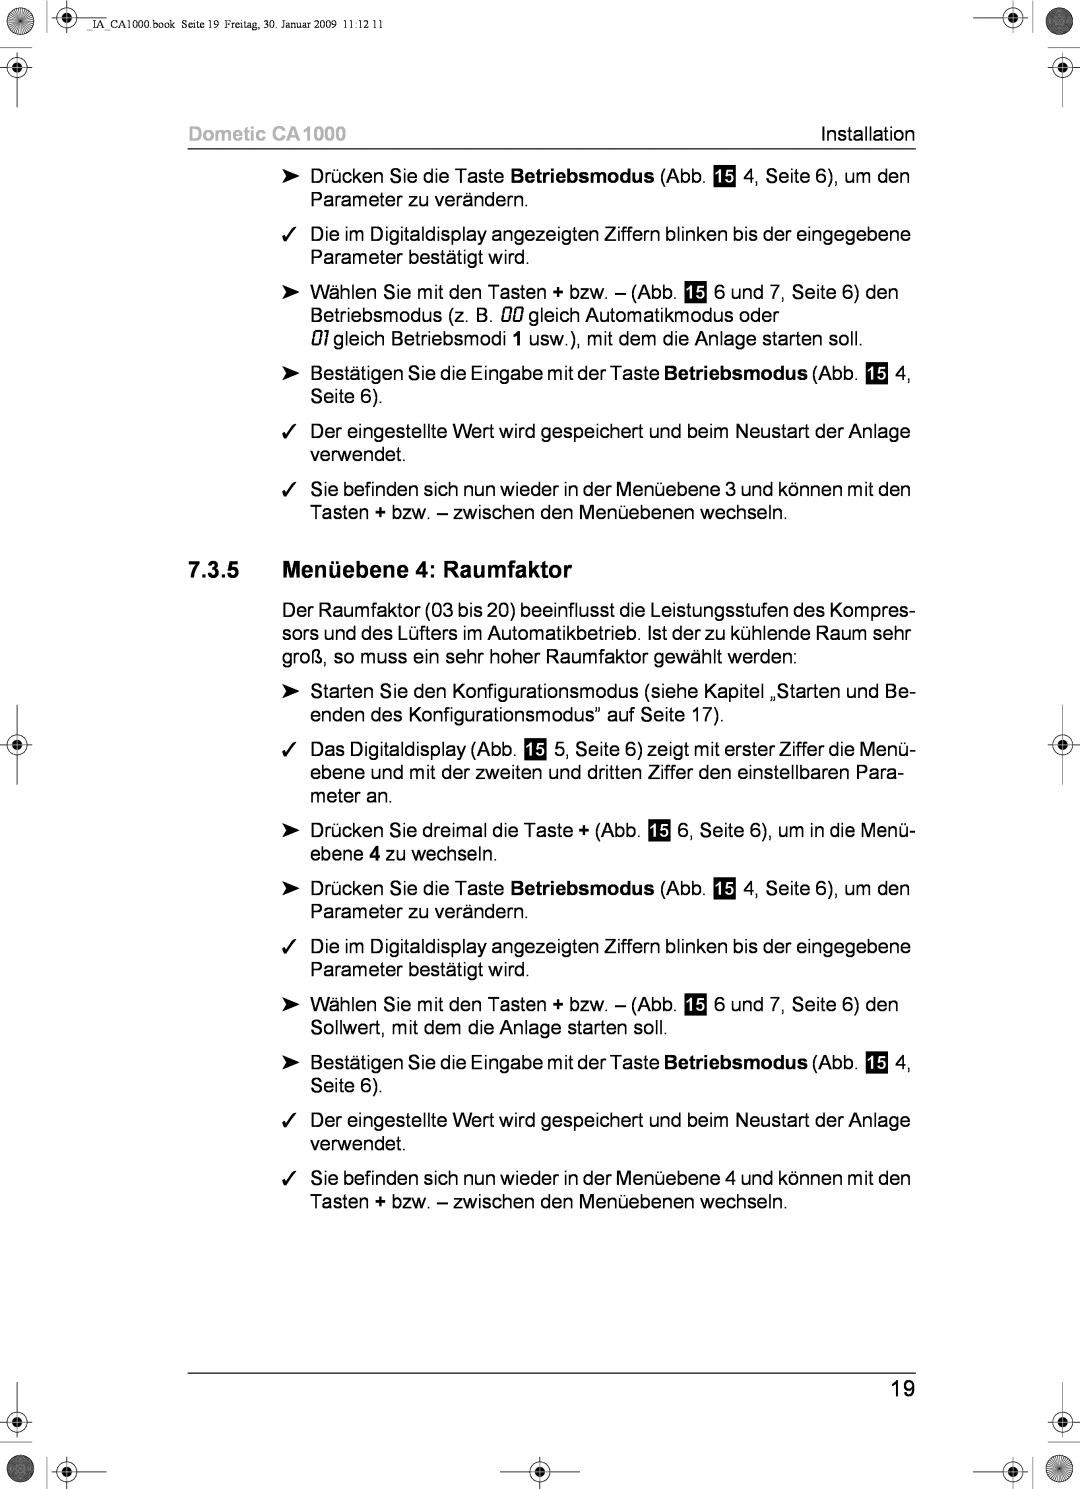 Dometic installation manual 7.3.5Menüebene 4: Raumfaktor, Dometic CA1000 